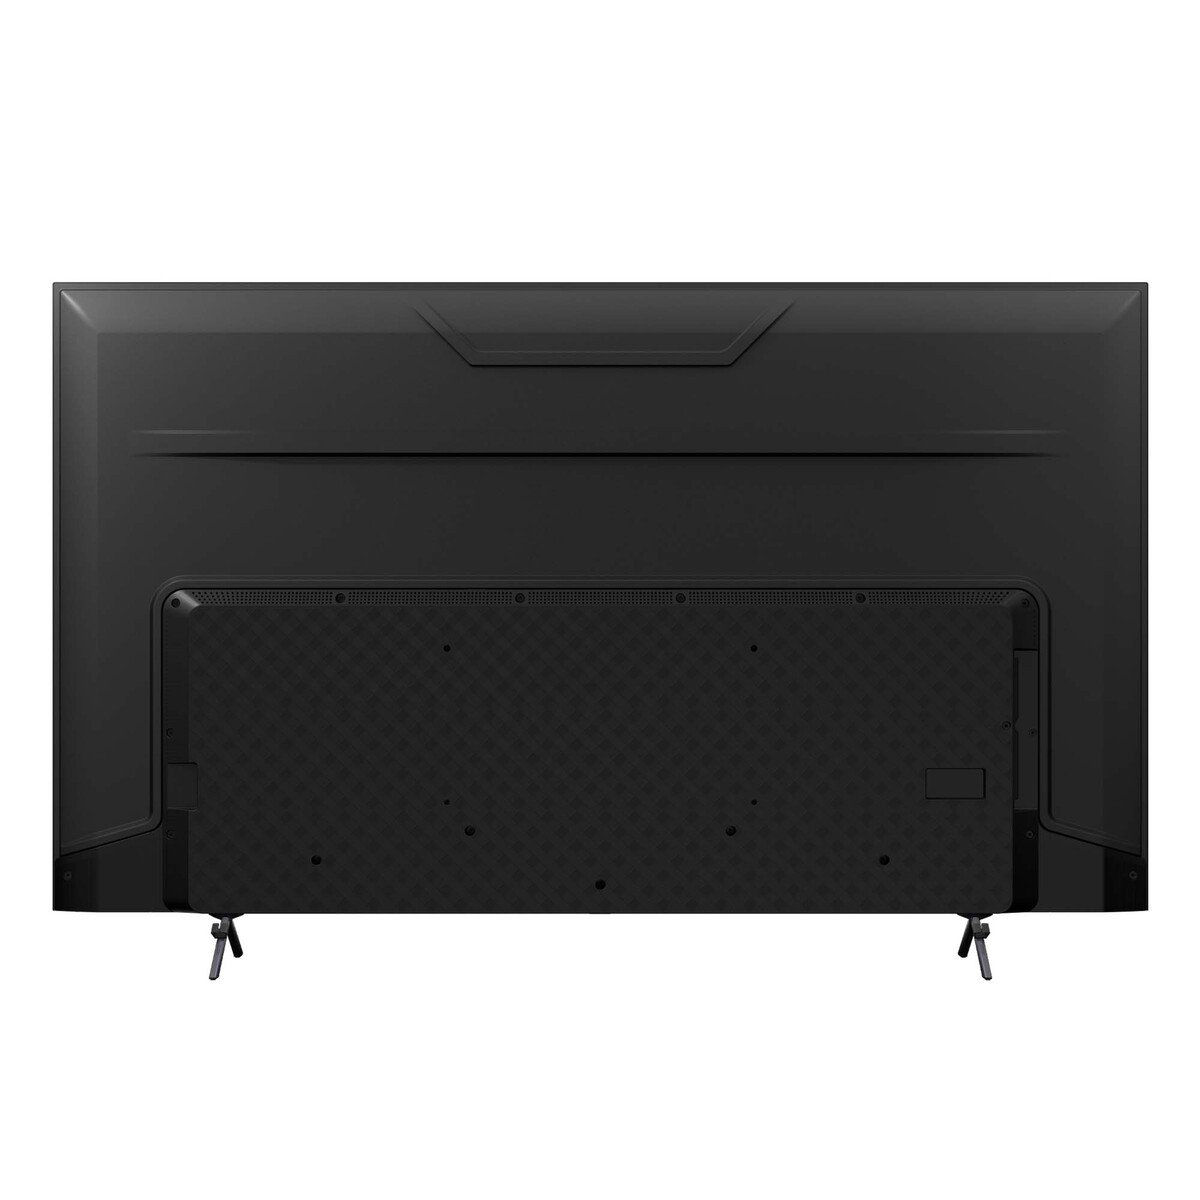 Hisense 65 Inches 4K Smart ULED TV, Black, 65U6G